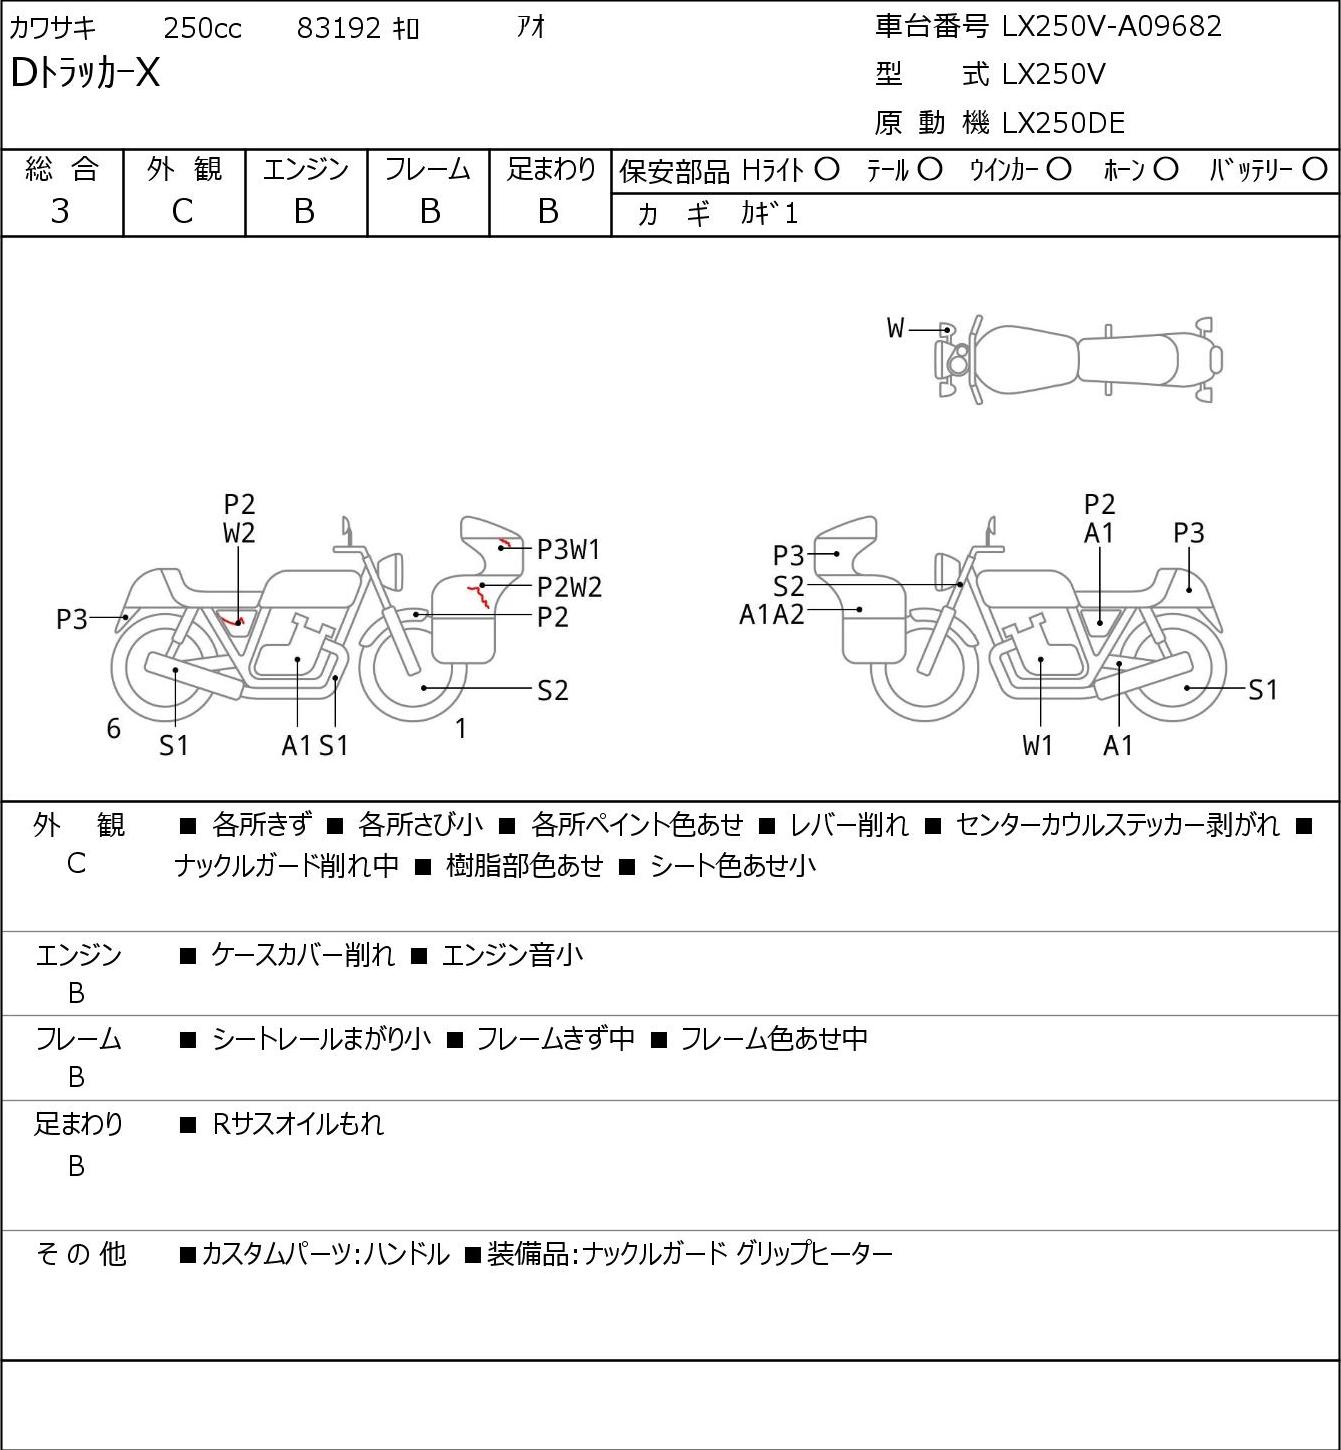 Kawasaki D-TRACKER X LX250V г. 83192